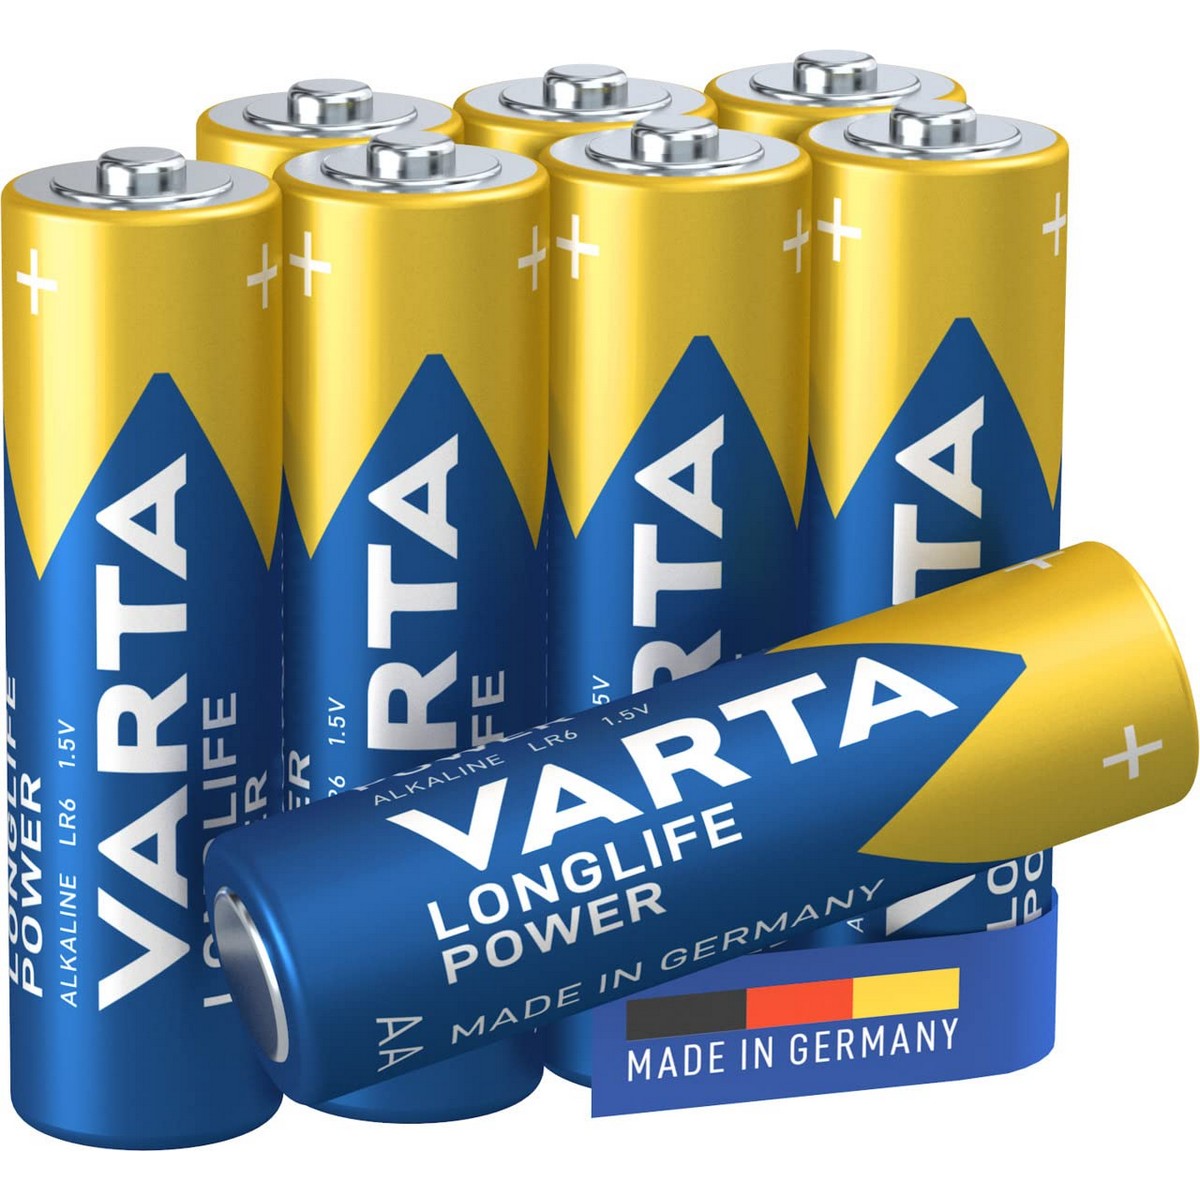 Batterie Varta Long Life Power AA (LR06) (8 Pezzi)